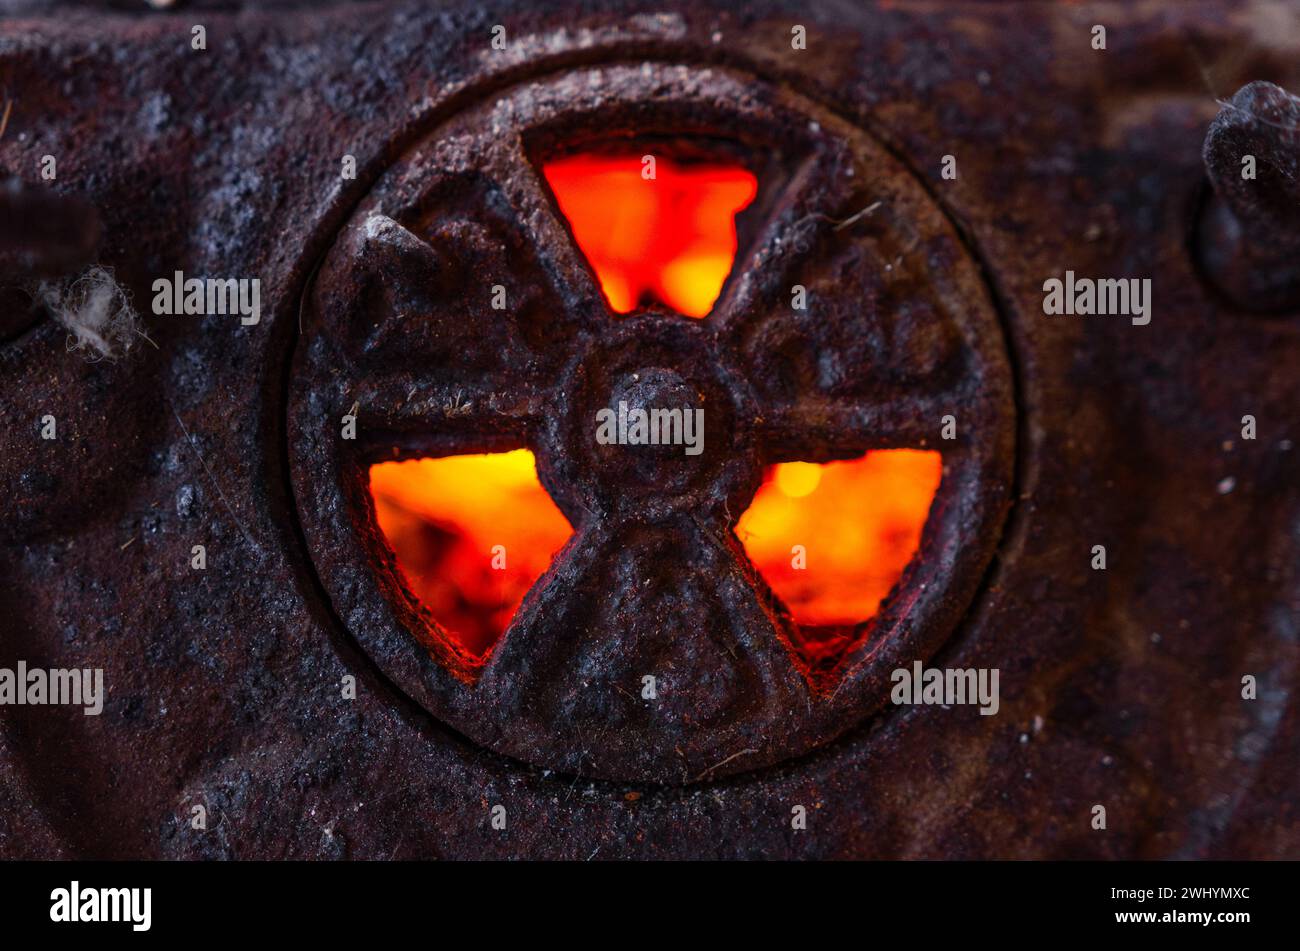 Radioactive symbol, Cast iron, Backlit, Glowing coals, Flame, Warning sign, Danger, Nuclear hazard, Radiation symbol Stock Photo